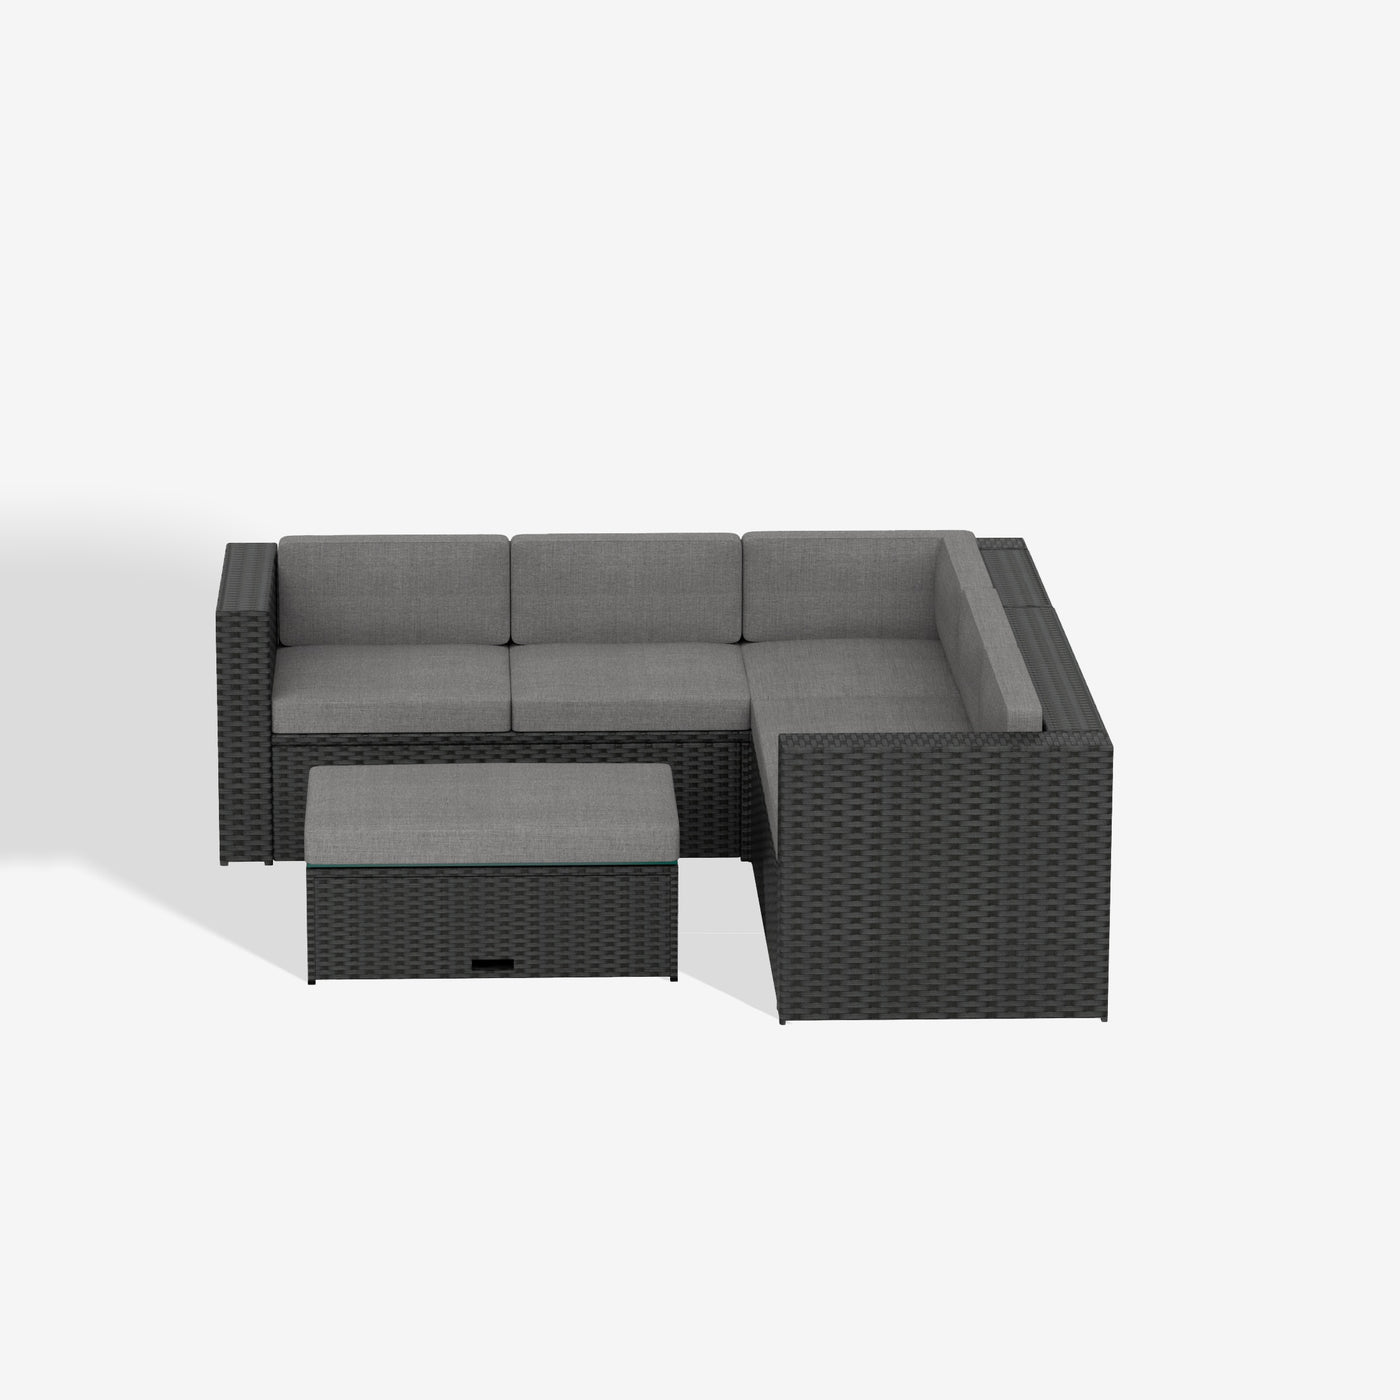 Bronx 6 Seating Outdoor Wicker Rattan Conversation Sofa Set with Storage Ottoman